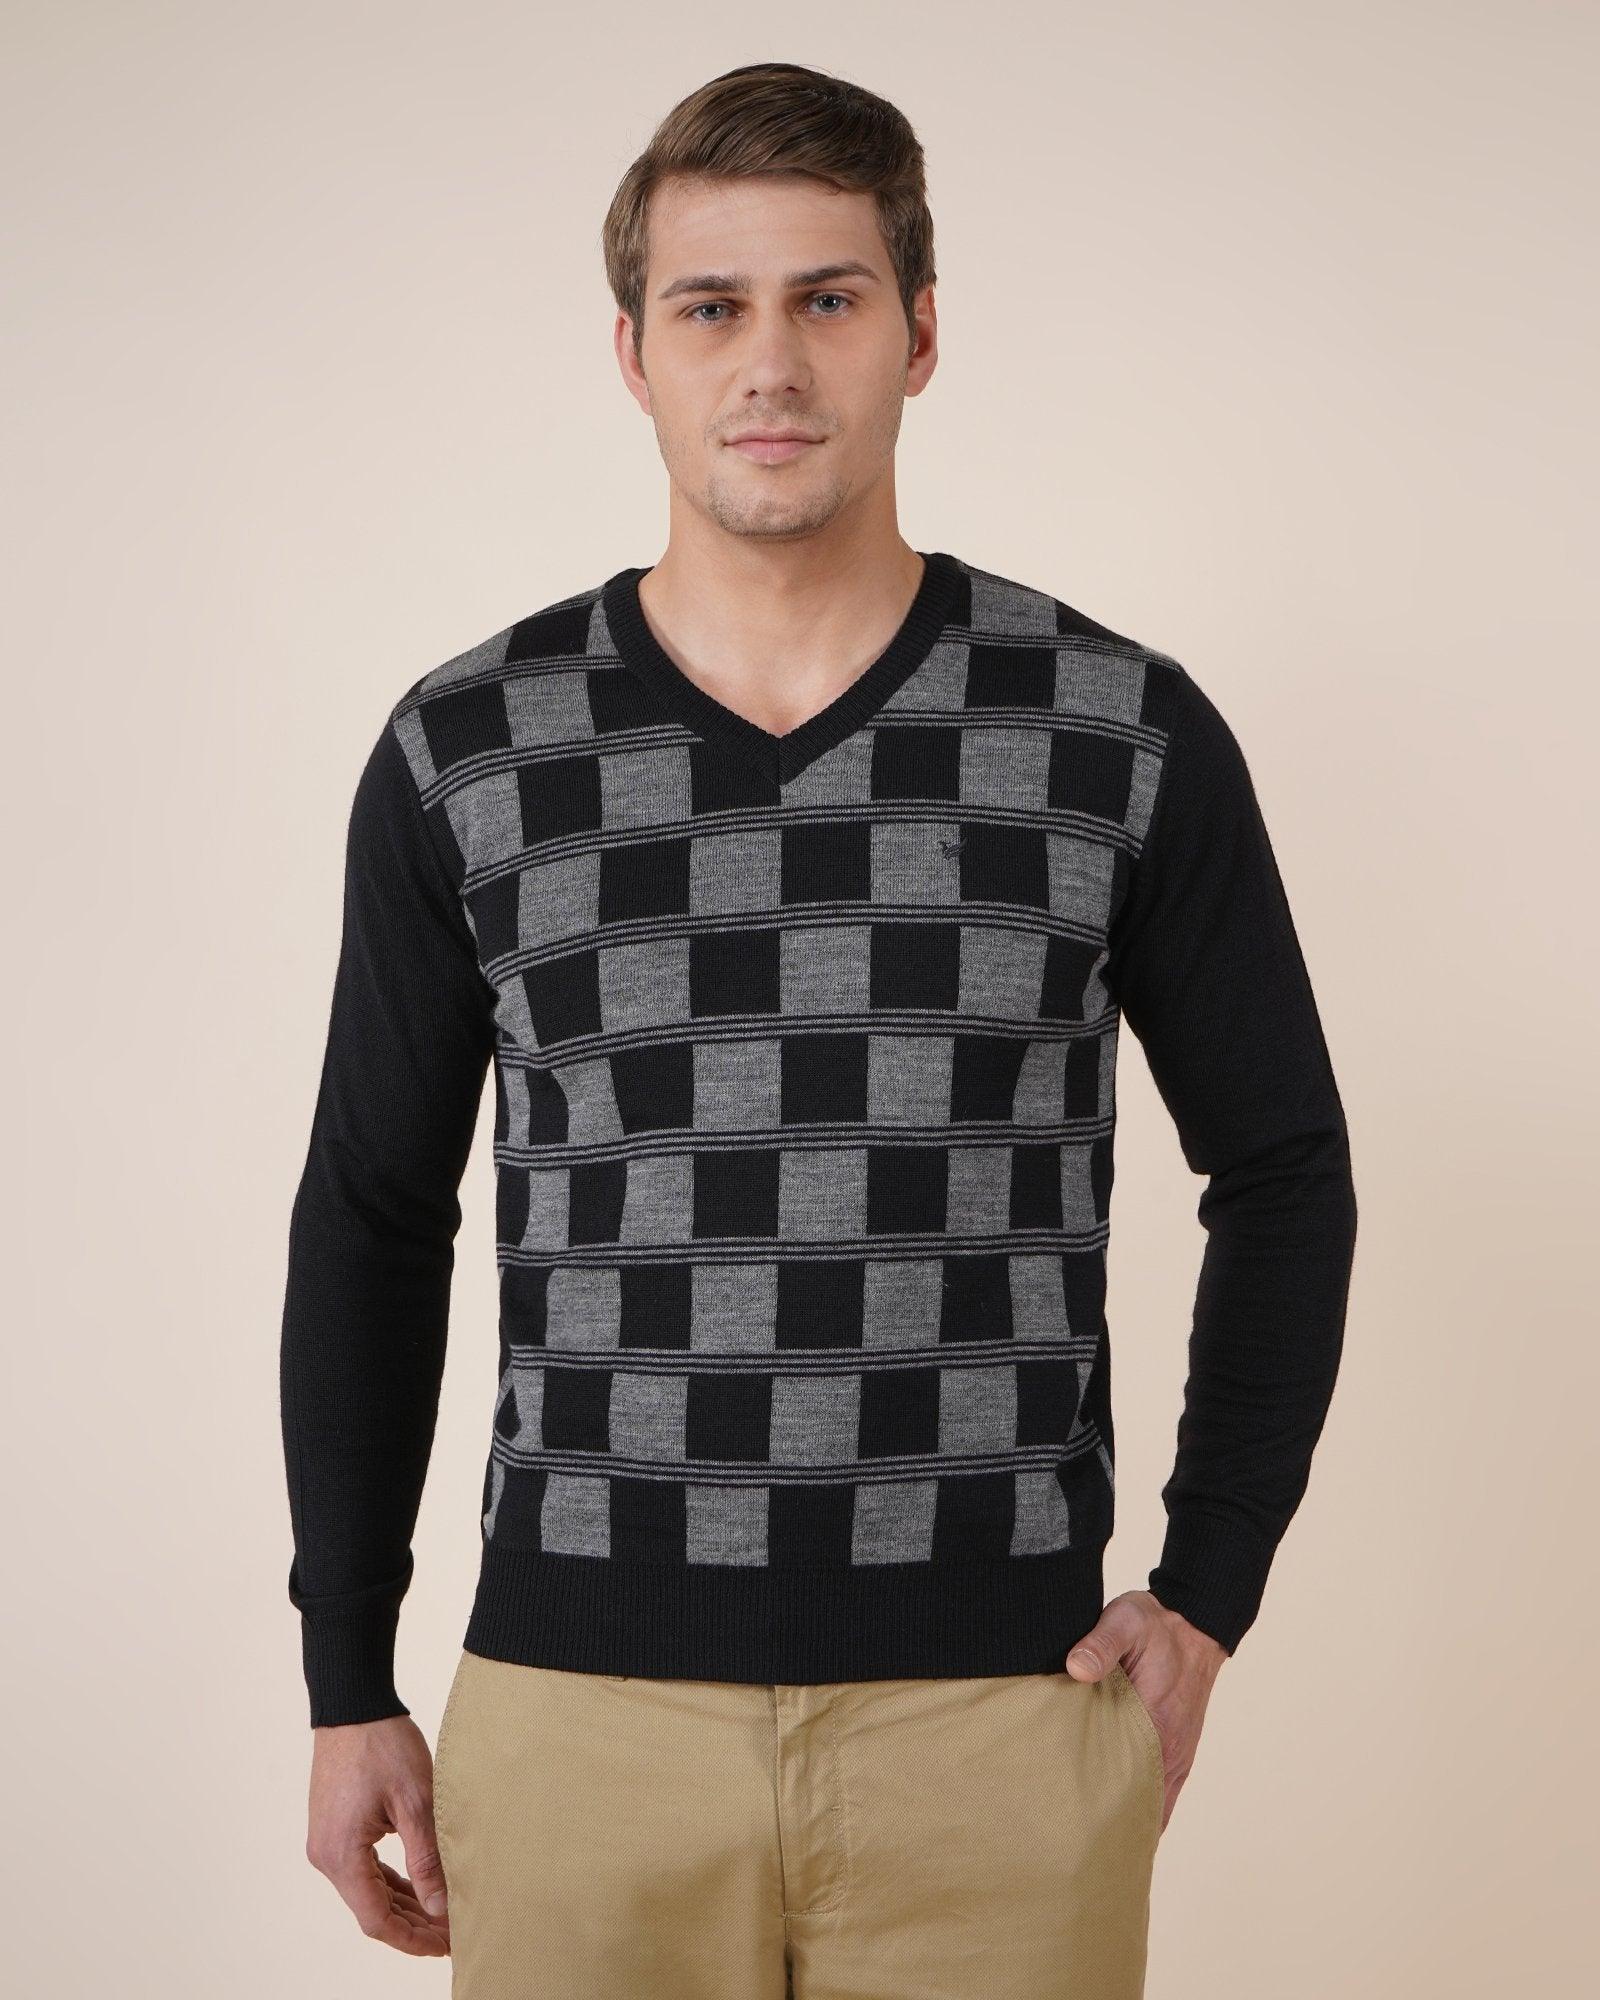 v-neck jet black textured sweater - ignea